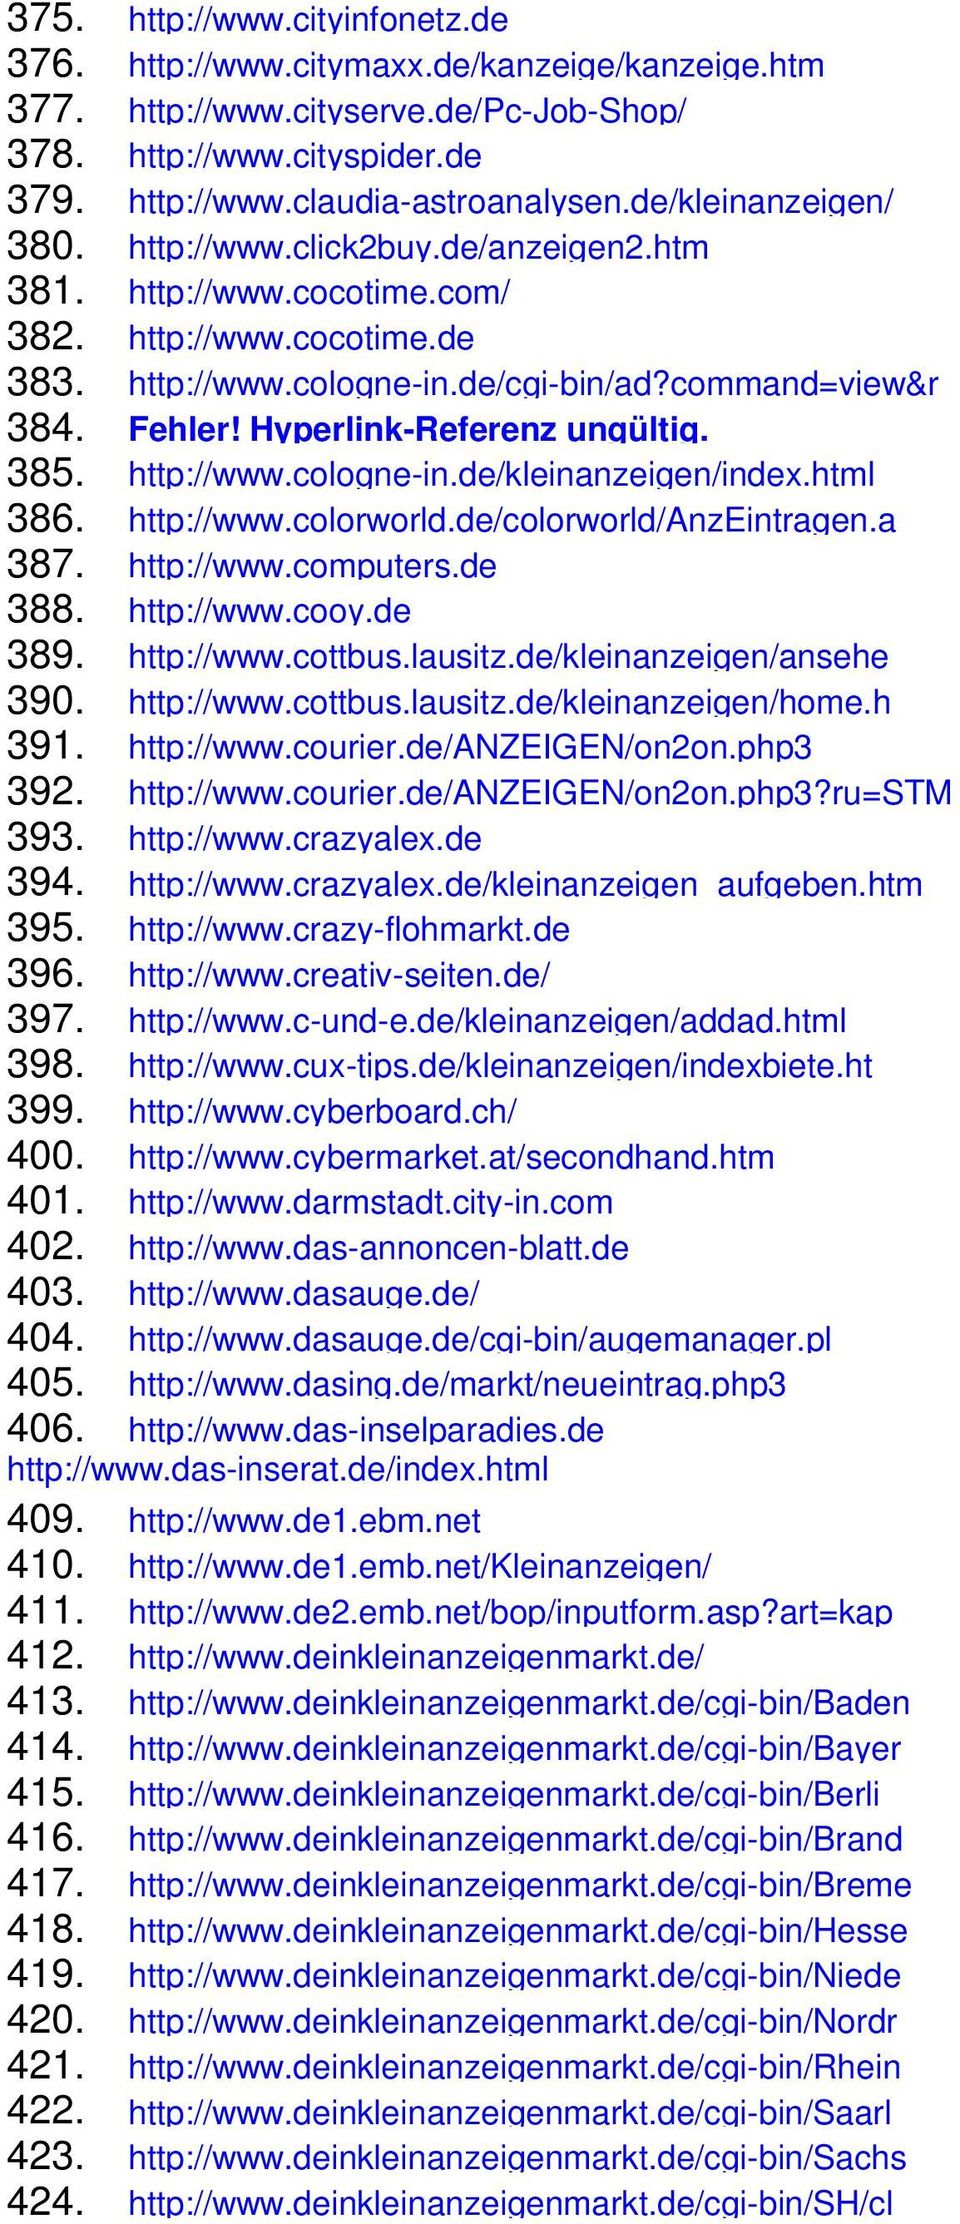 Hyperlink-Referenz ungültig. 385. http://www.cologne-in.de/kleinanzeigen/index.html 386. http://www.colorworld.de/colorworld/anzeintragen.a 387. http://www.computers.de 388. http://www.cooy.de 389.